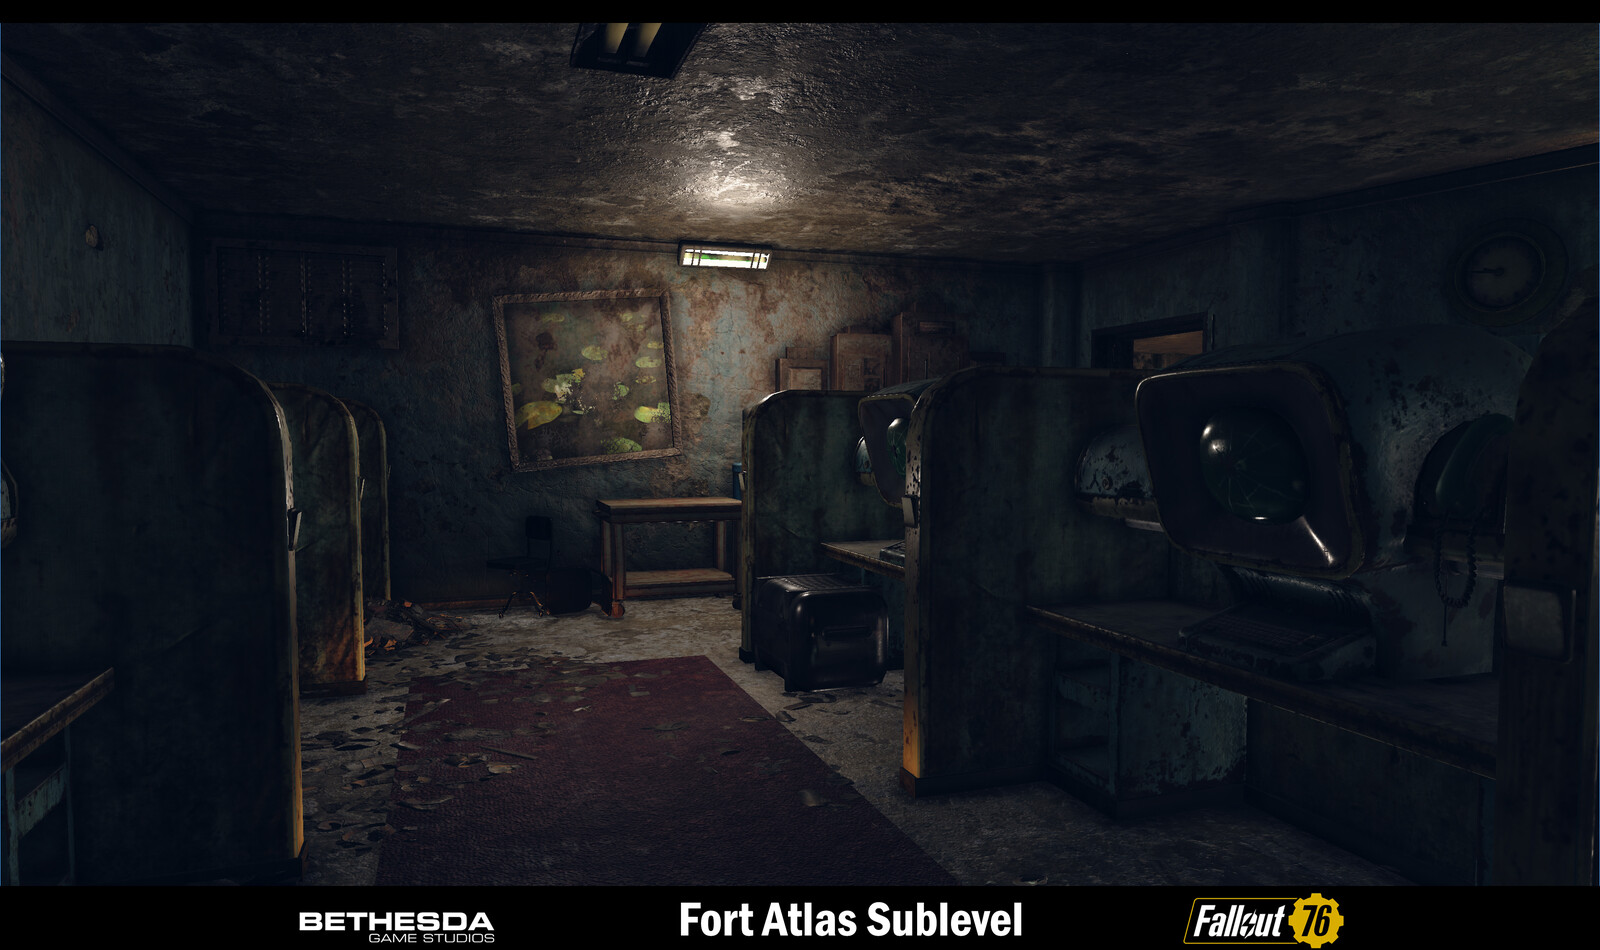 Alex Burback - Fallout 76, Fort Atlas Sublevels